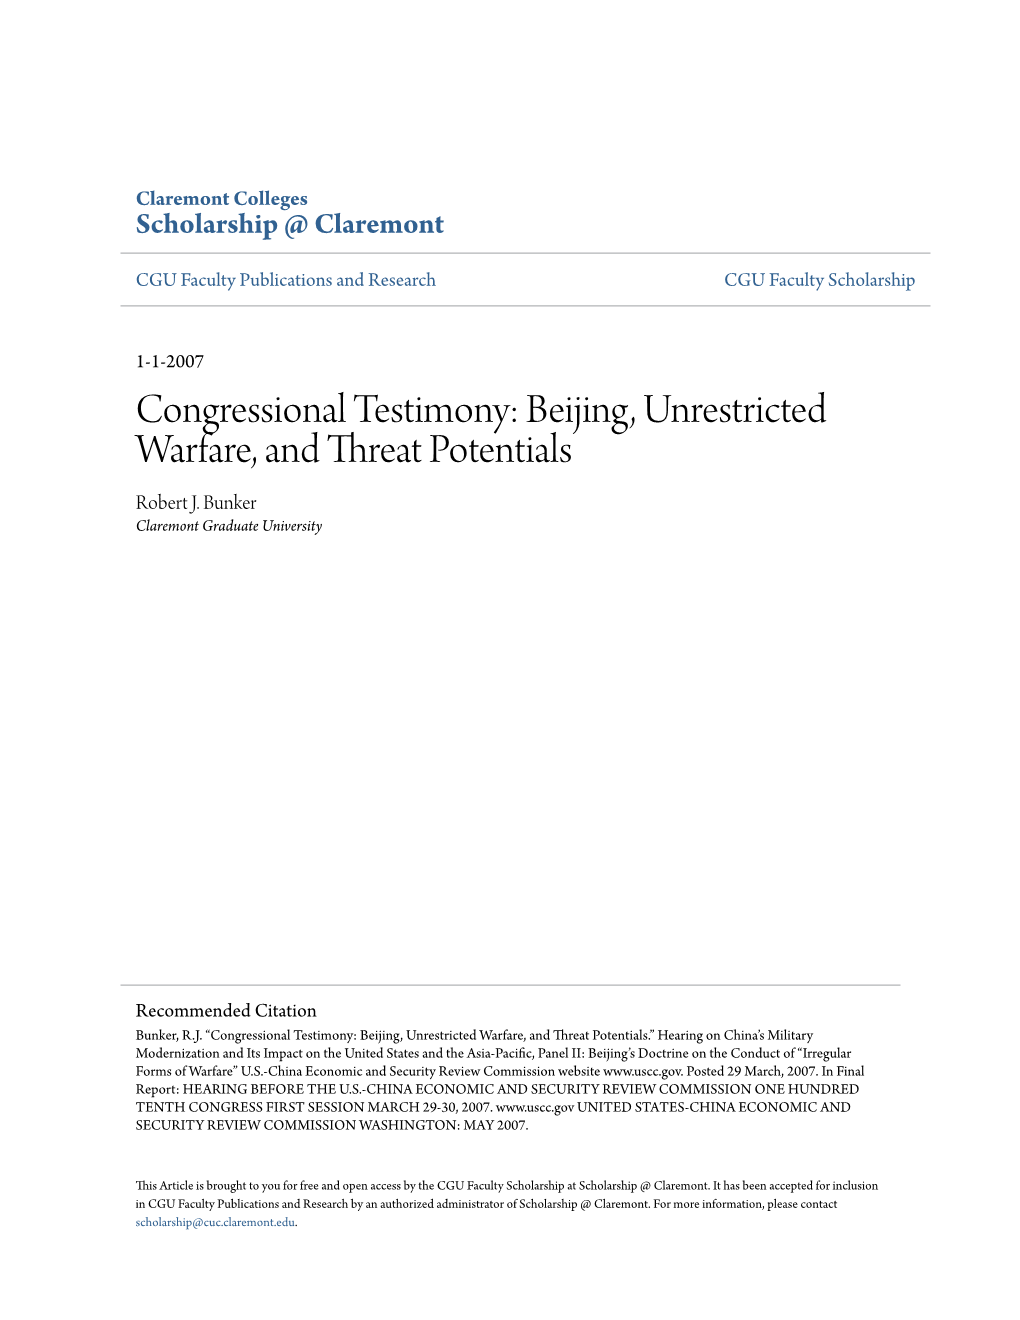 Congressional Testimony: Beijing, Unrestricted Warfare, and Threat Potentials Robert J